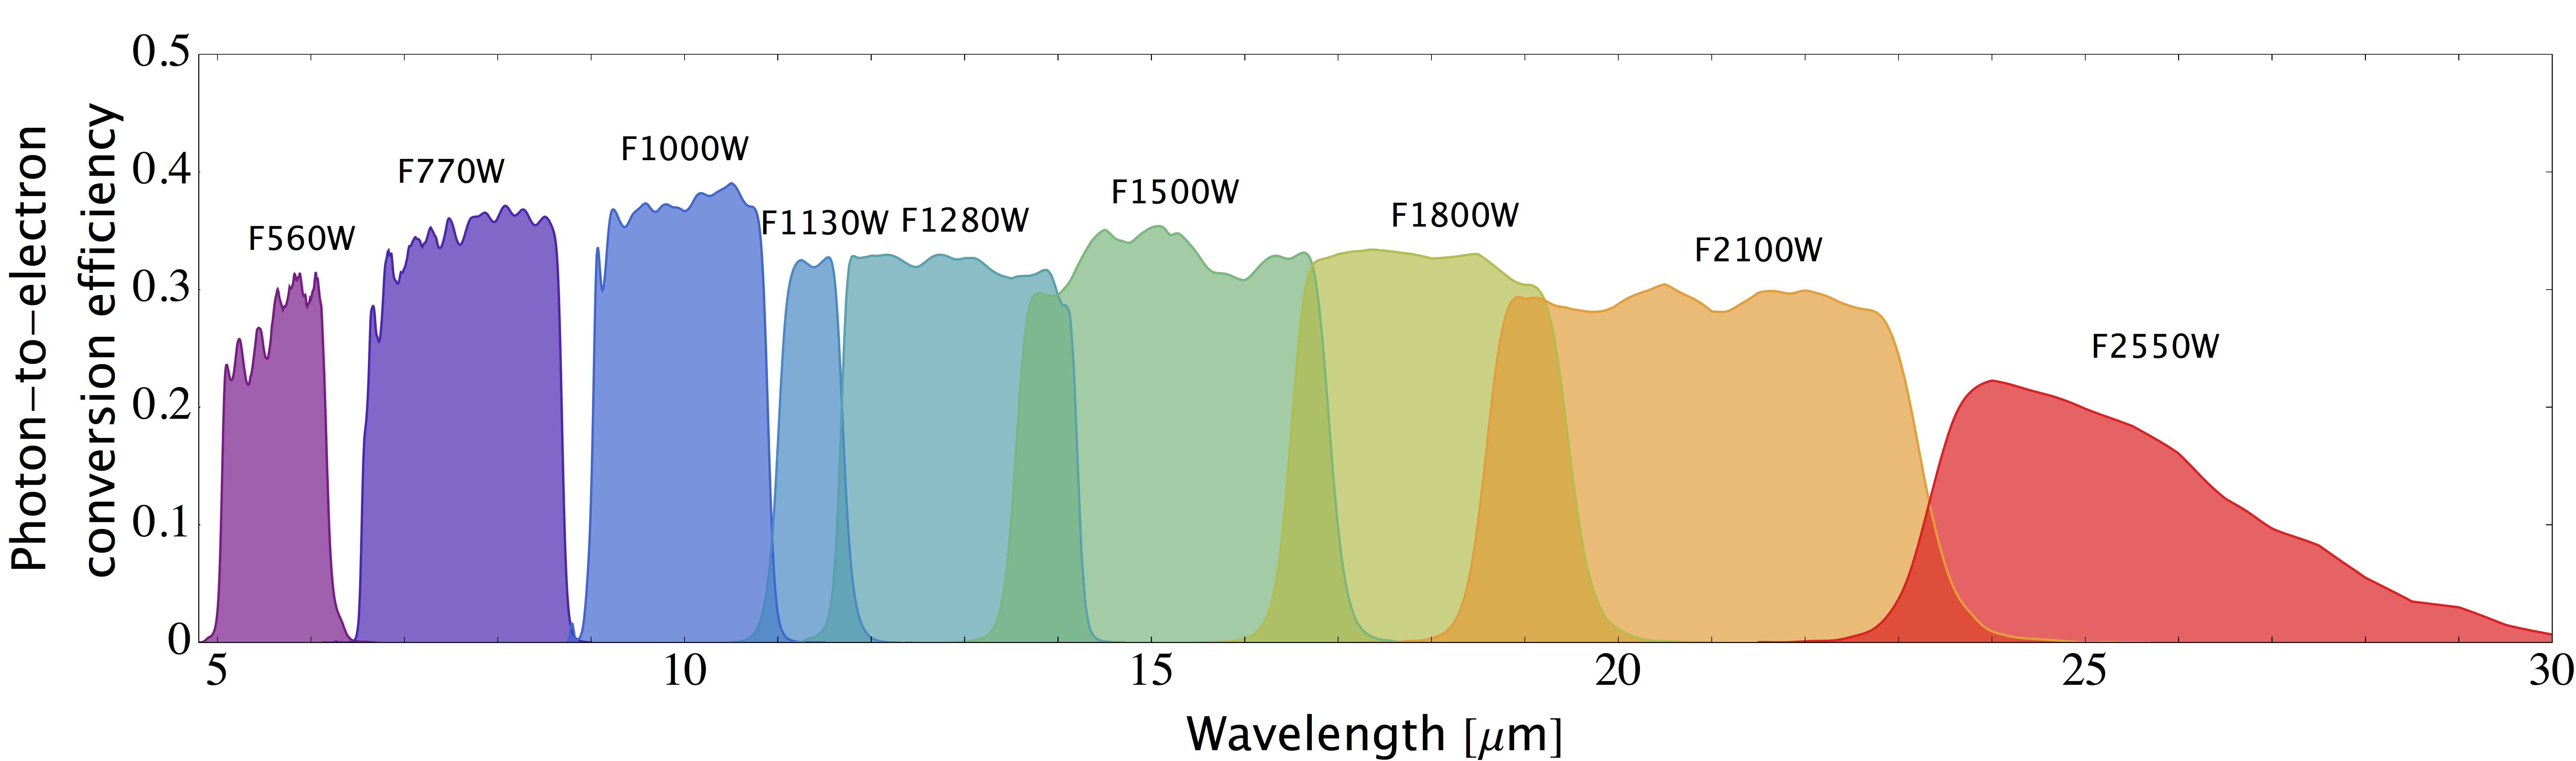 Figure showing MIRI imaging filter bandpasses